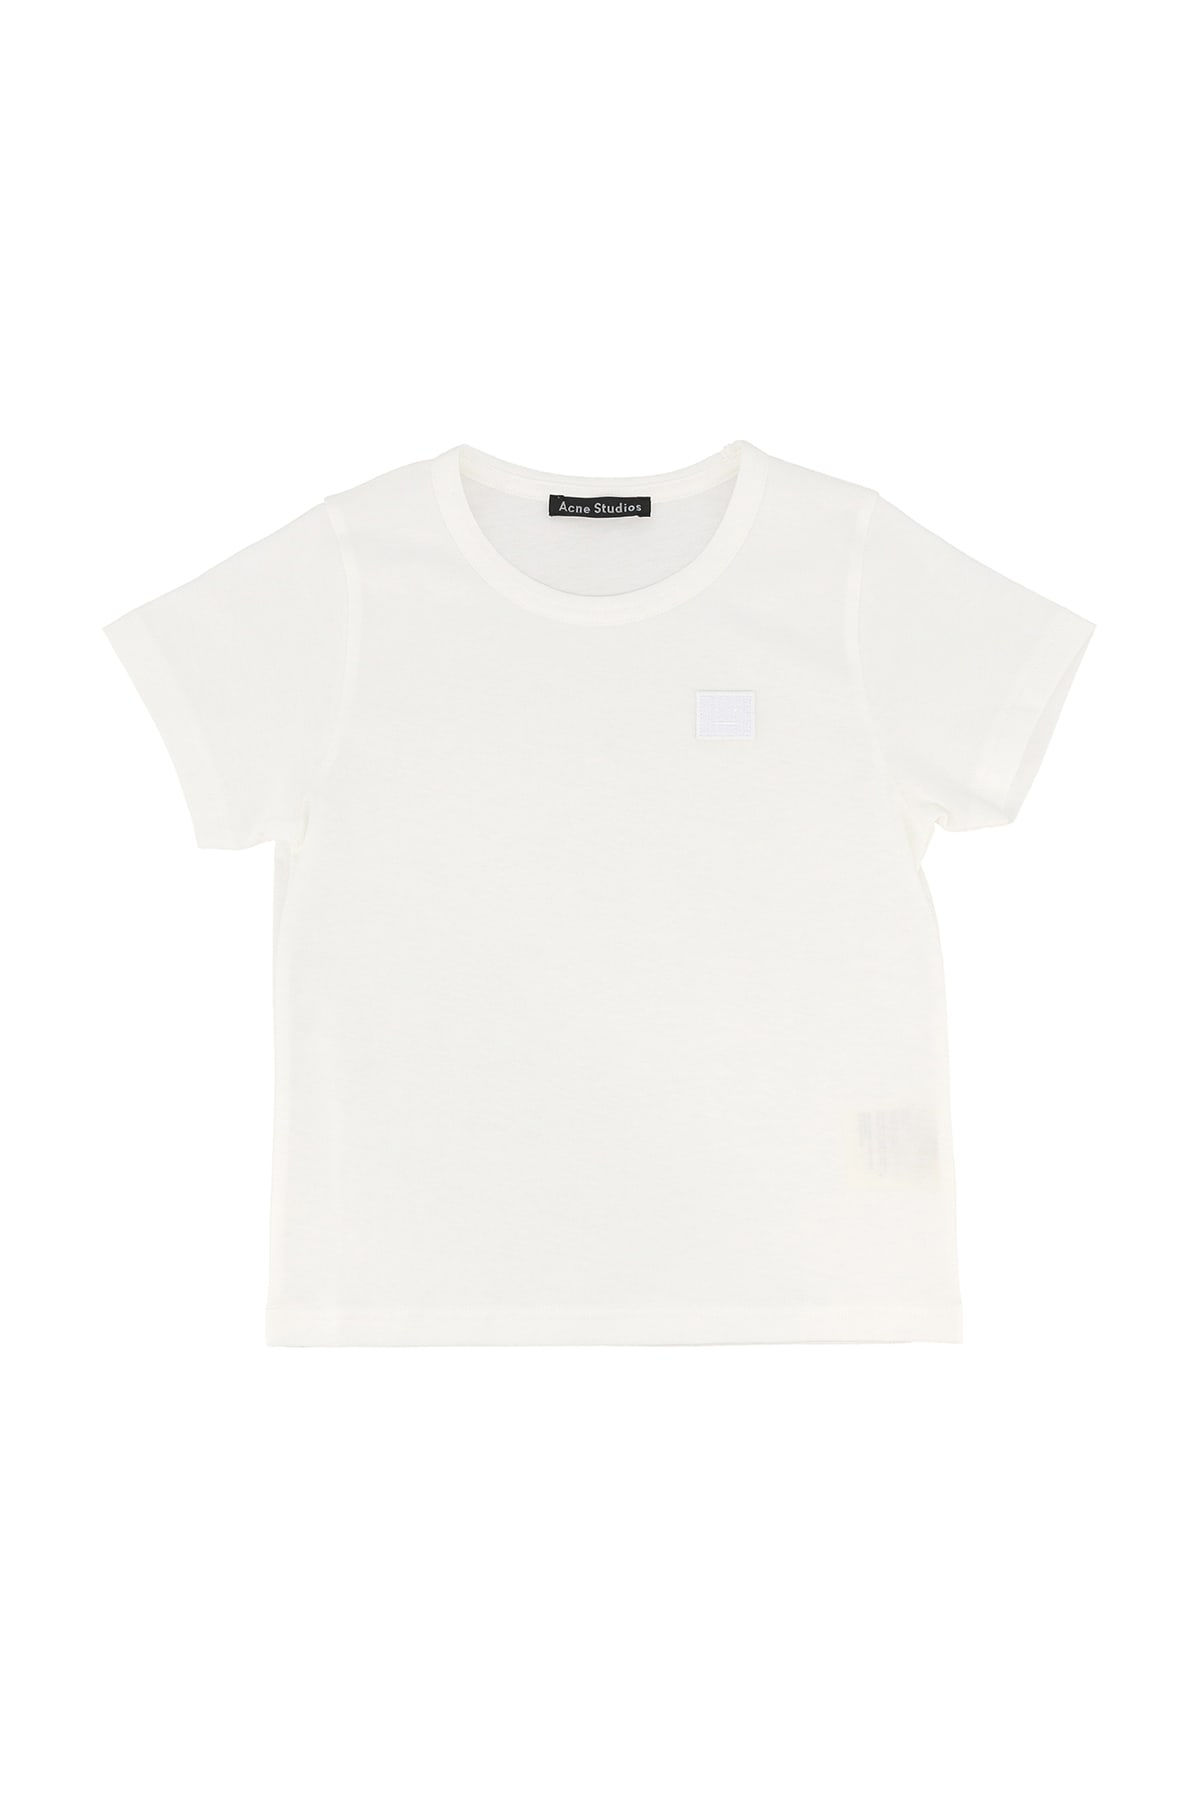 Acne Studios Kids' White T-shirt In Bianco